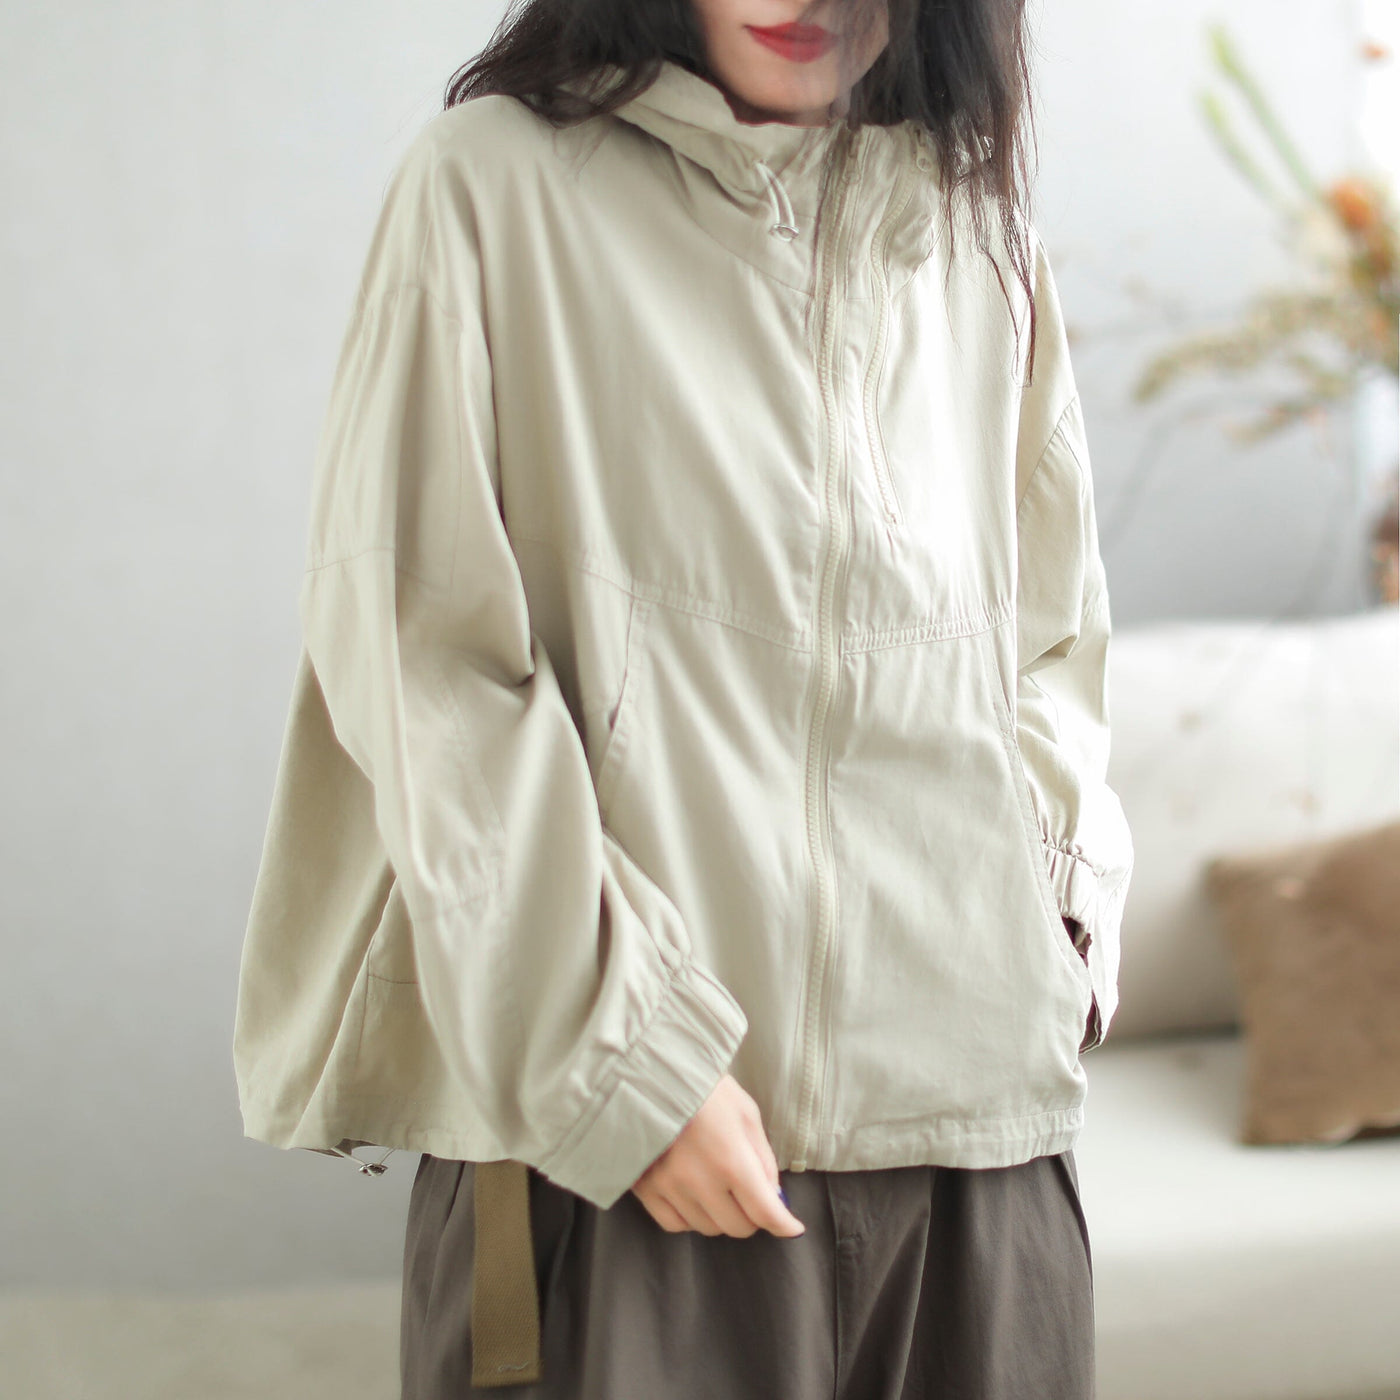 Autumn Fashion Casual Loose Cotton Hooded Jacket